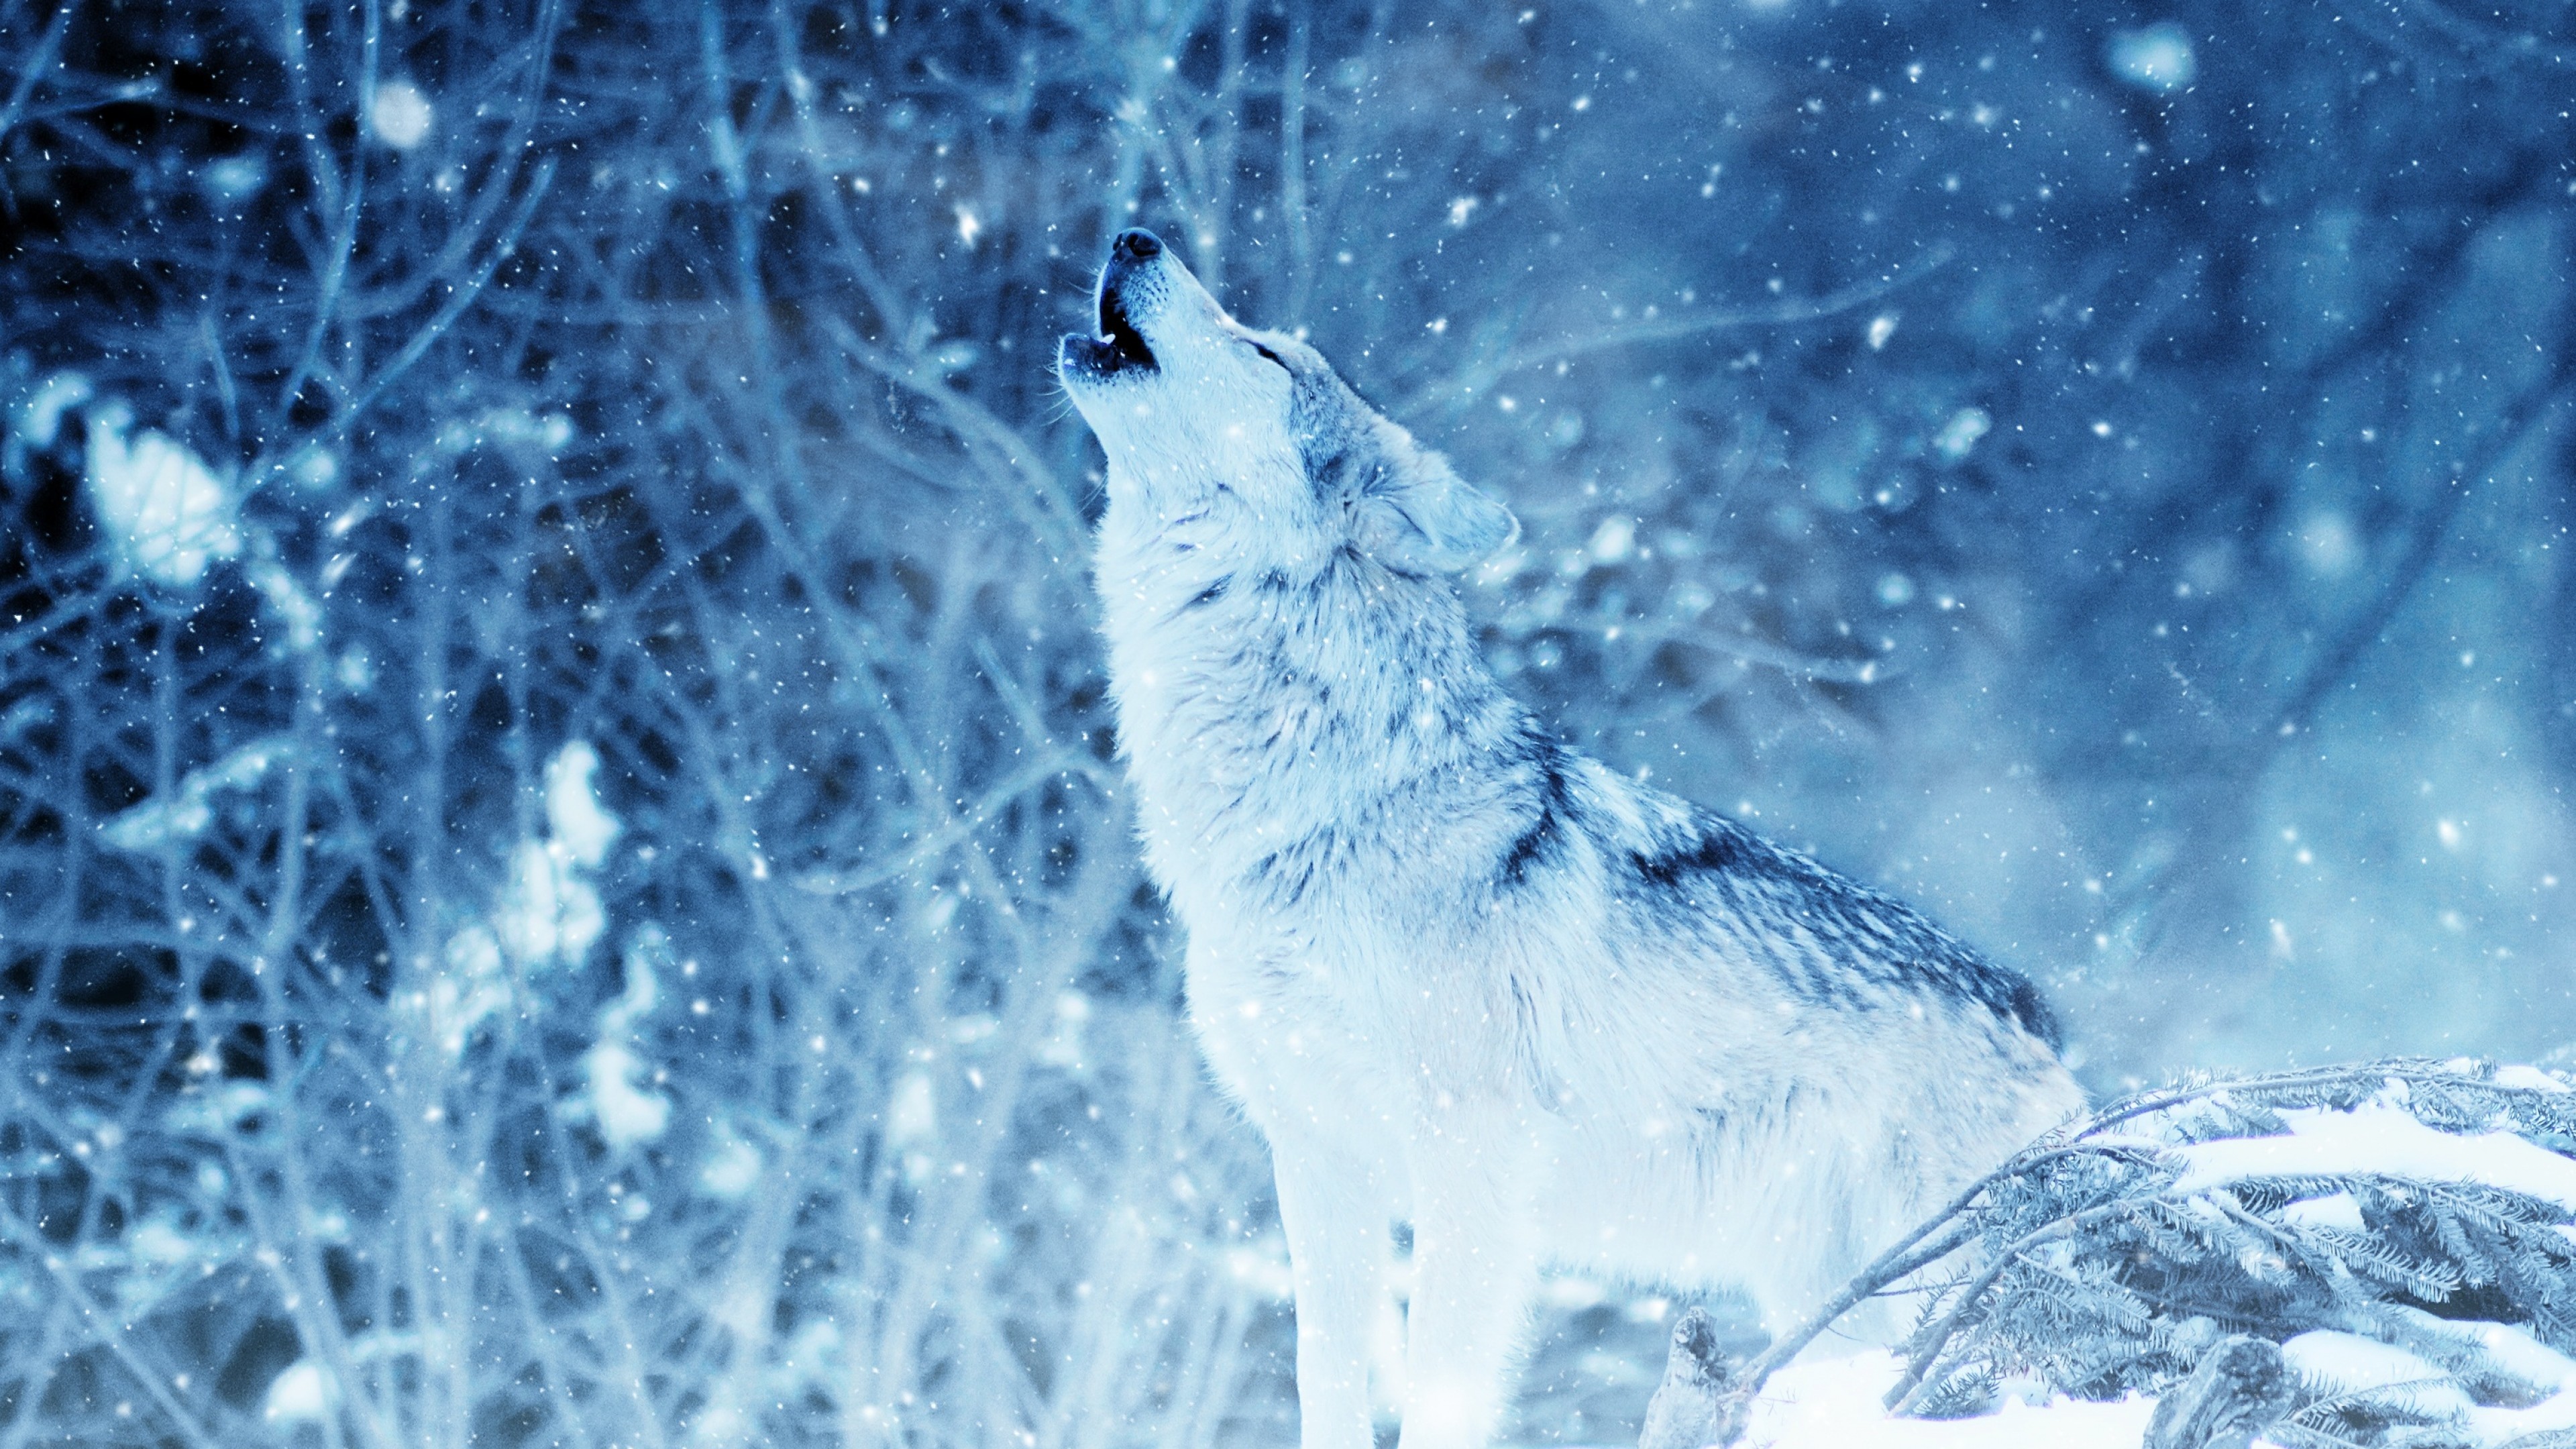 Wolf Backgrounds for Desktop (64+ images)